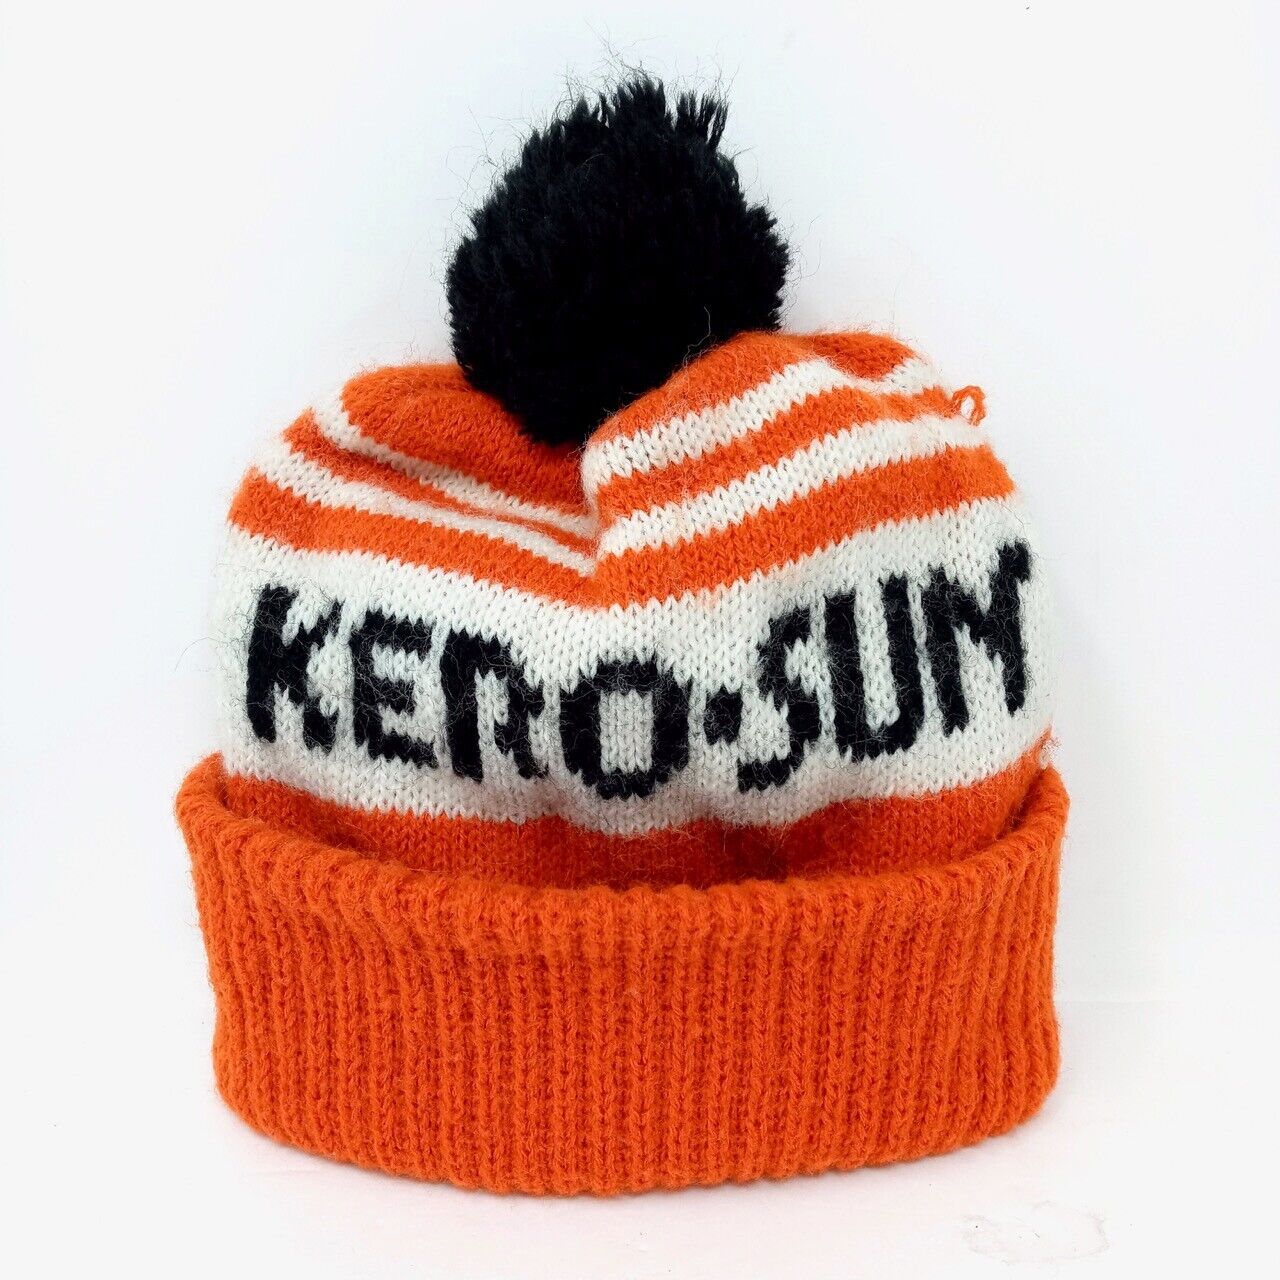 Vintage KERO-SUN Kerosene Heater Collectible Promo Knitted Winter Cap Hat - RARE